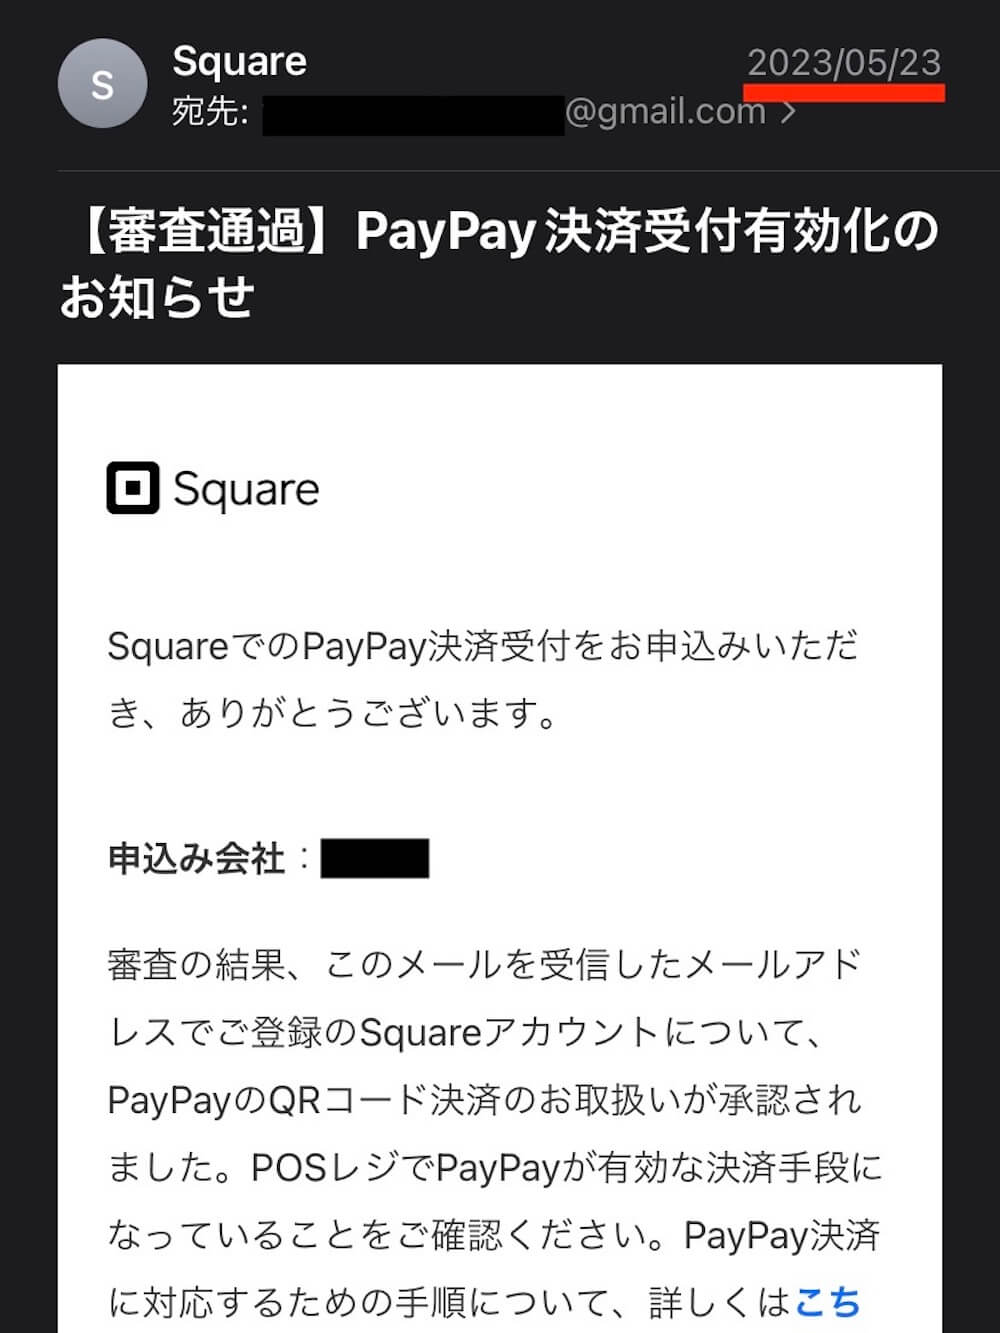 Squareから届くPayPayの有効化完了通知メール